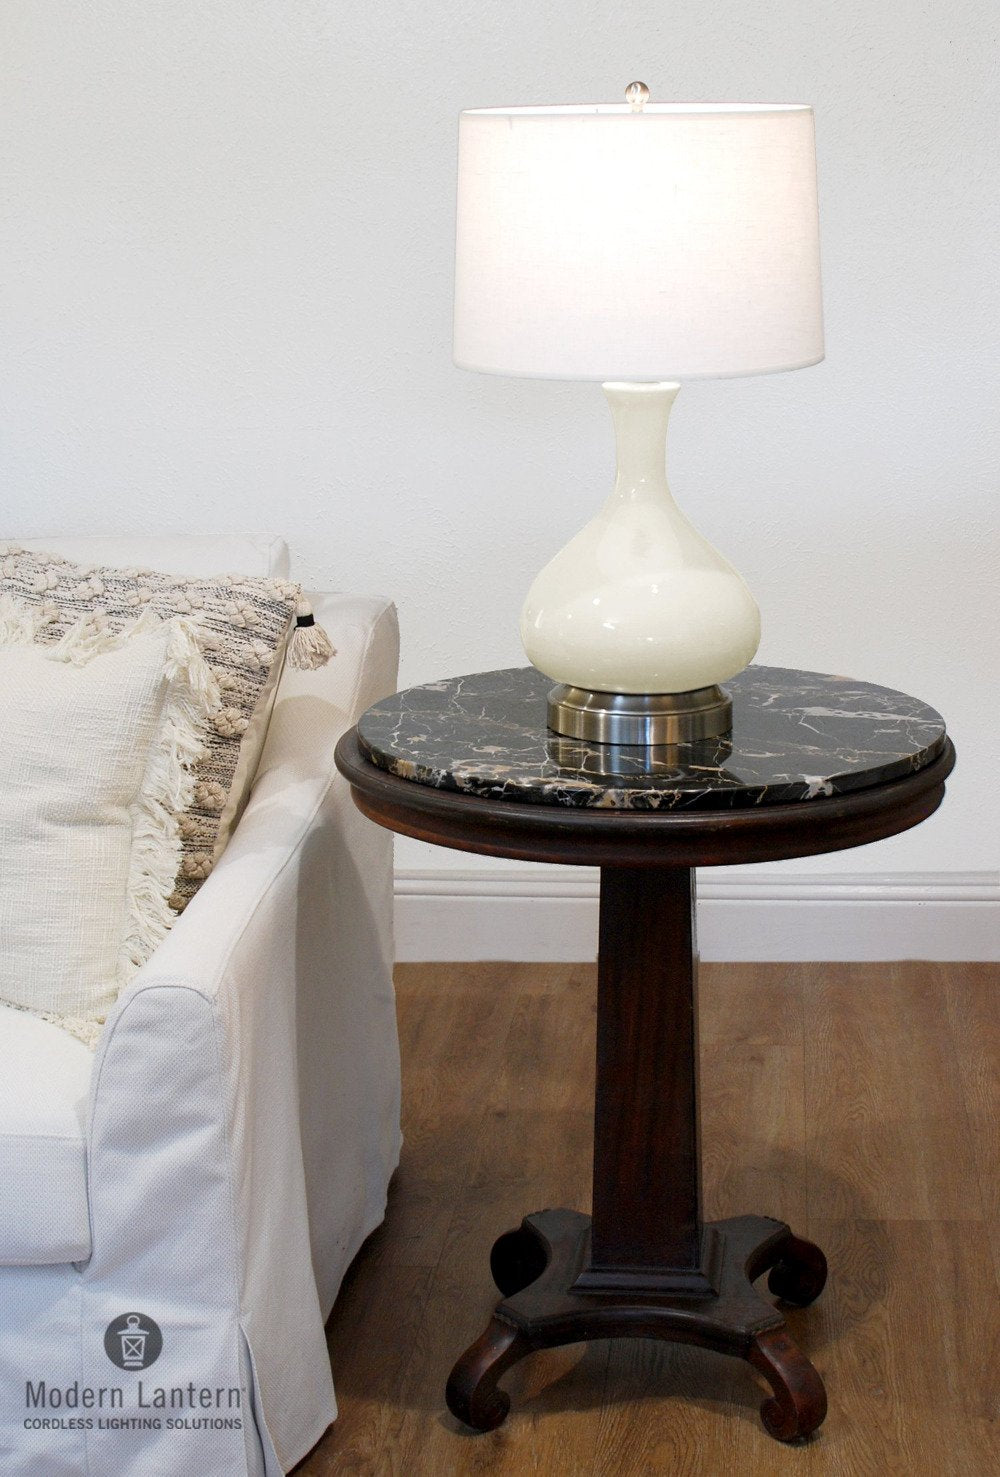 Modern Lantern Bartlett Cordless Lamp in Ivory and Nickel Finish